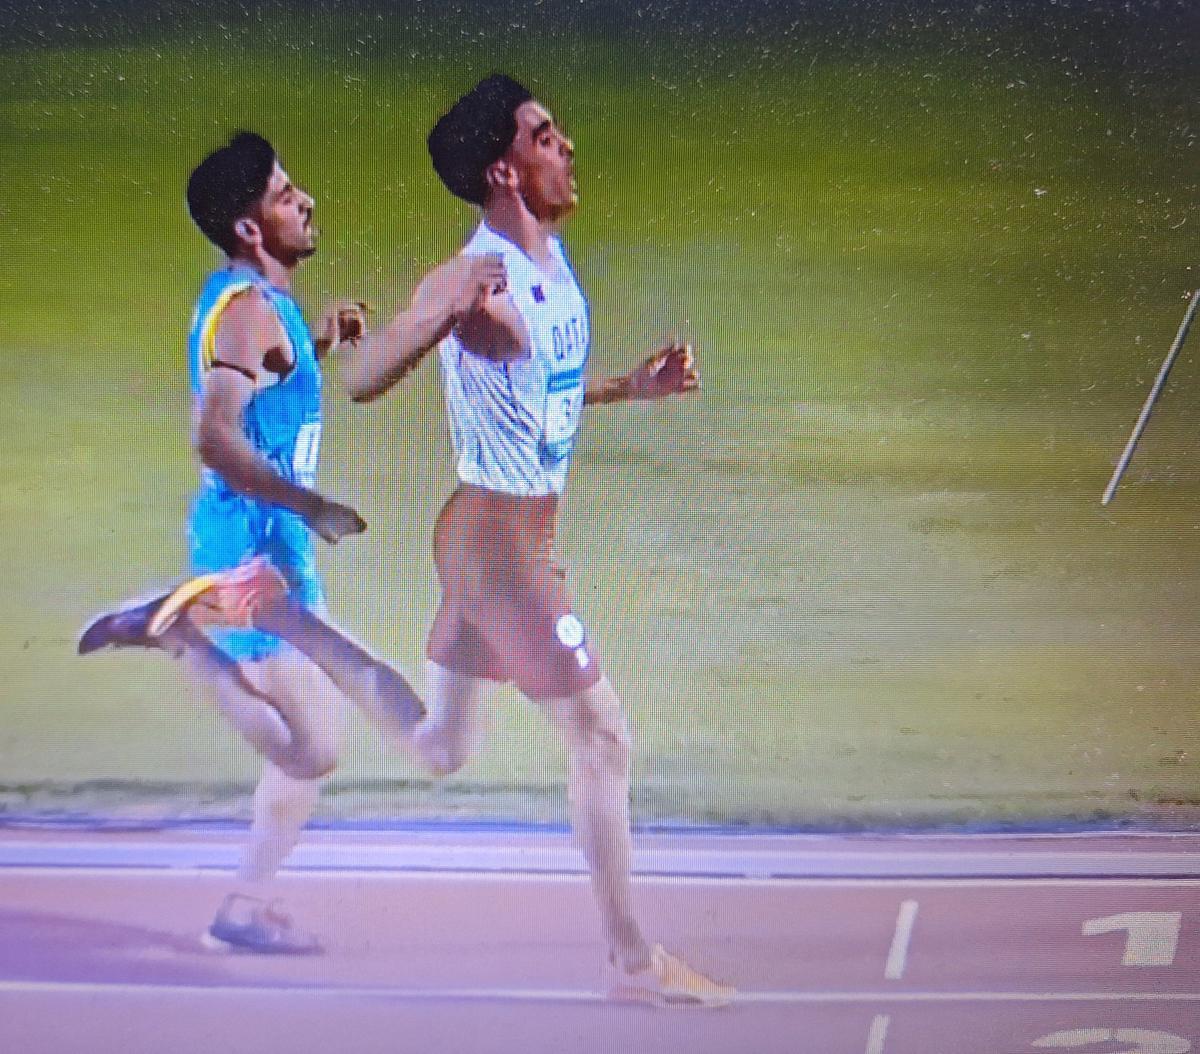 Qatar’s Aitoulghazi beating India’s Priyanshu for the men’s 1500m gold. 